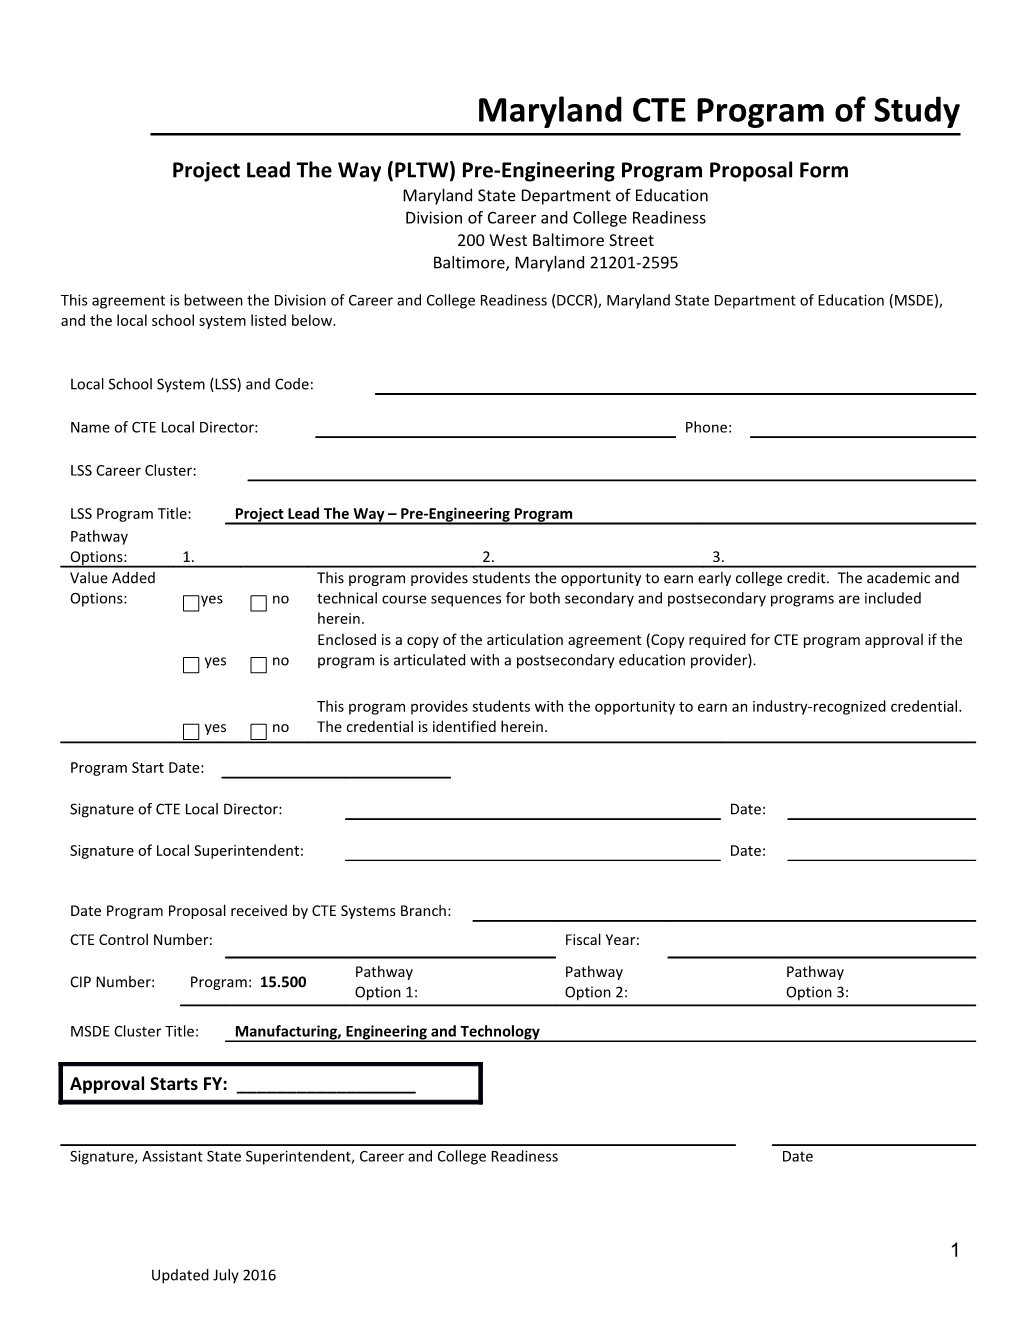 Project Lead the Way (PLTW) Pre-Engineering Program Proposal Form